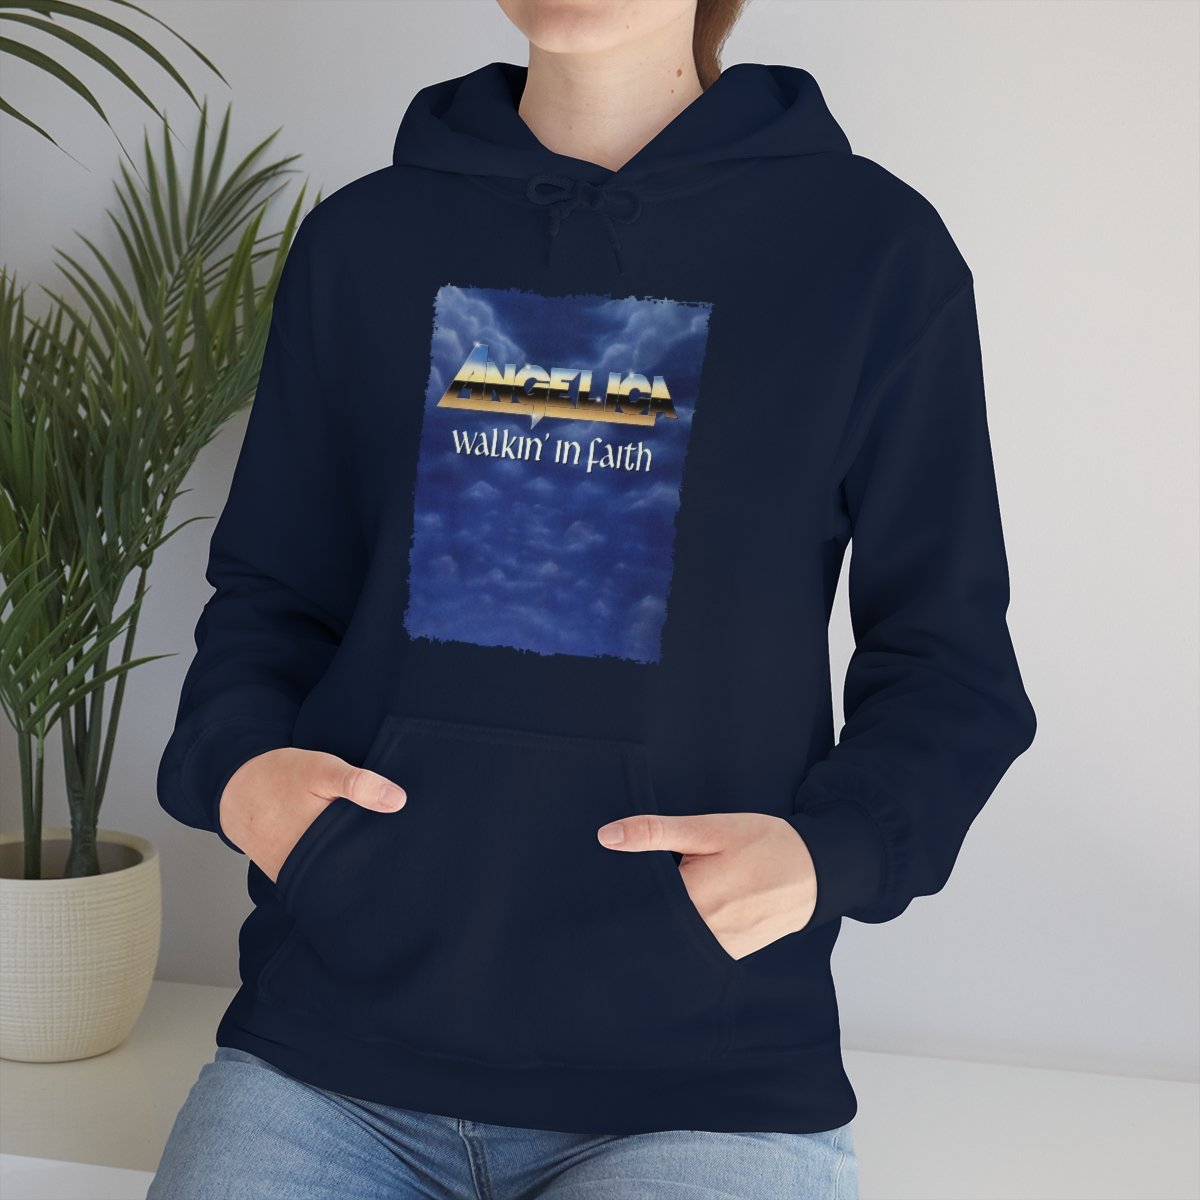 Angelica – Walkin’ In Faith Pullover Hooded Sweatshirt 185MD